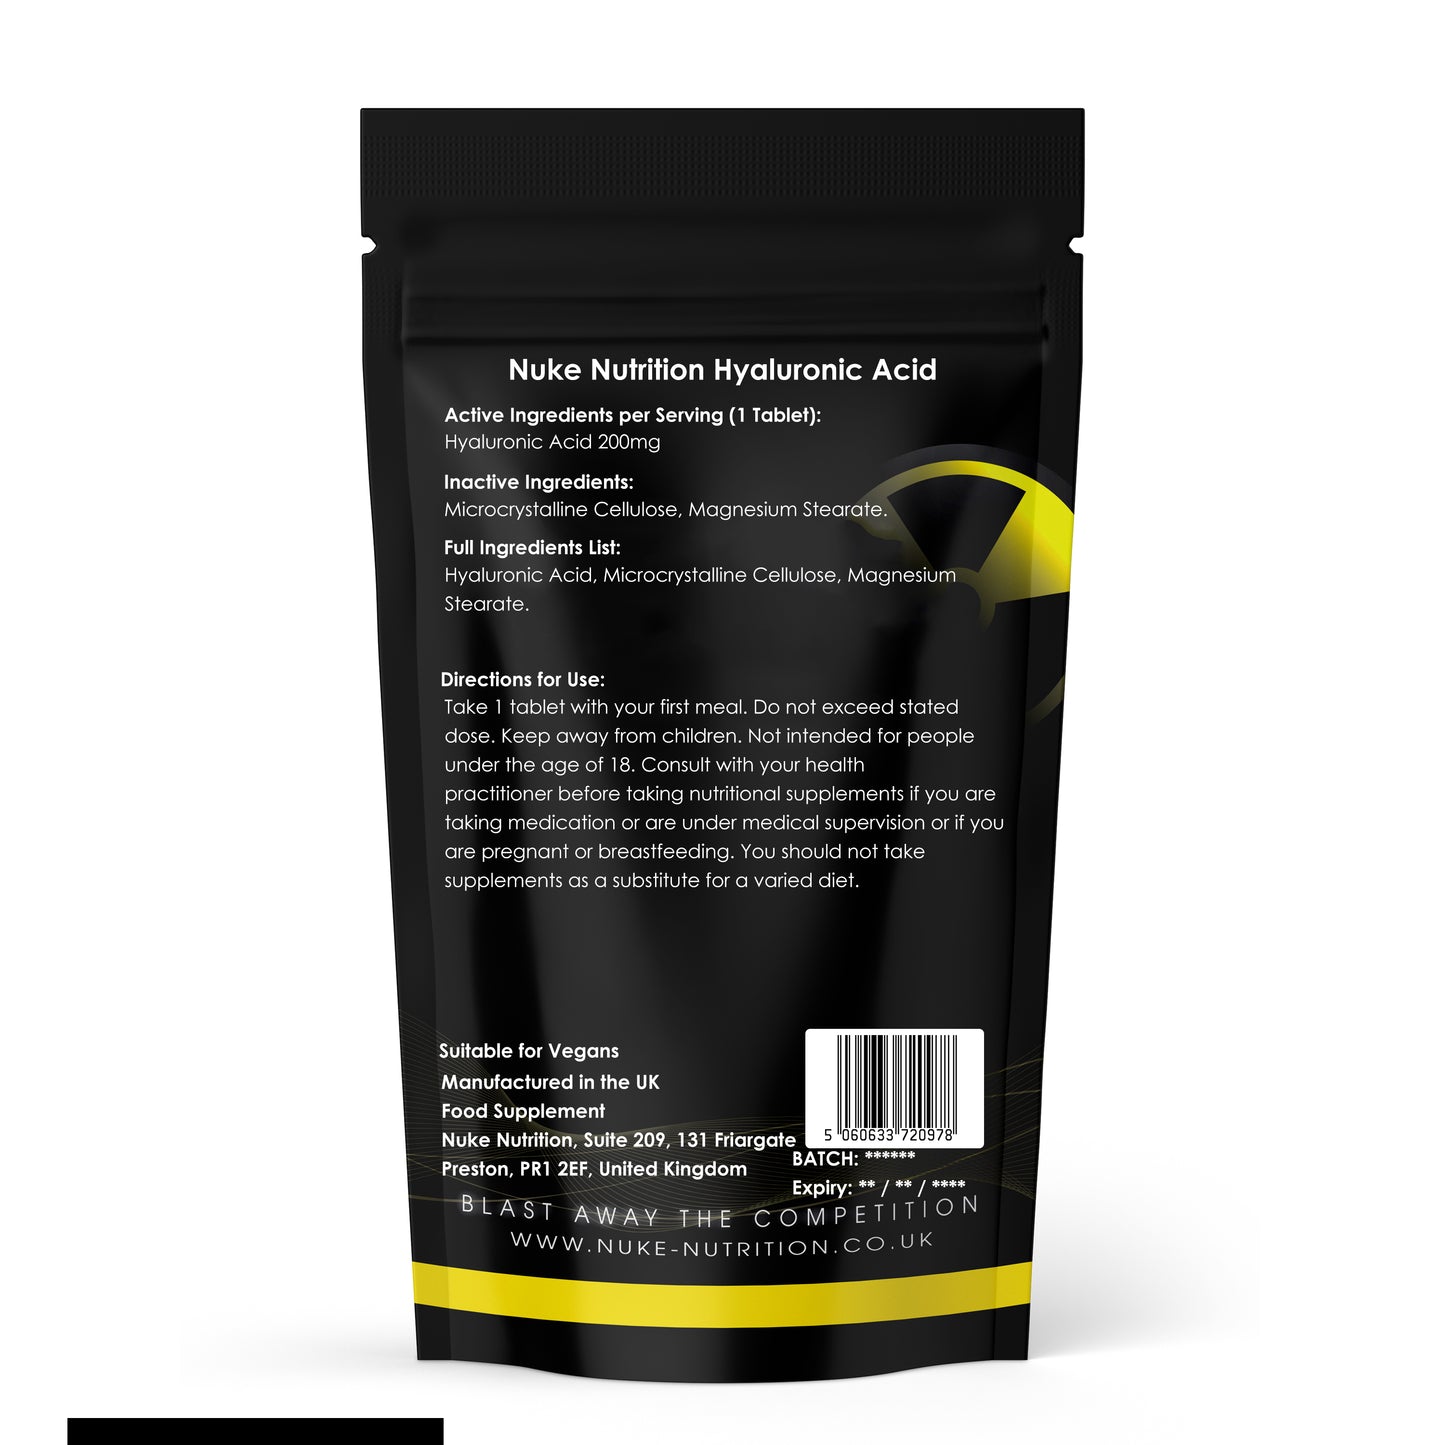 Hair & Skin Care Bundle - Hyaluronic Acid, Vitamin C, Biotin - High Strength x 180 Tablets